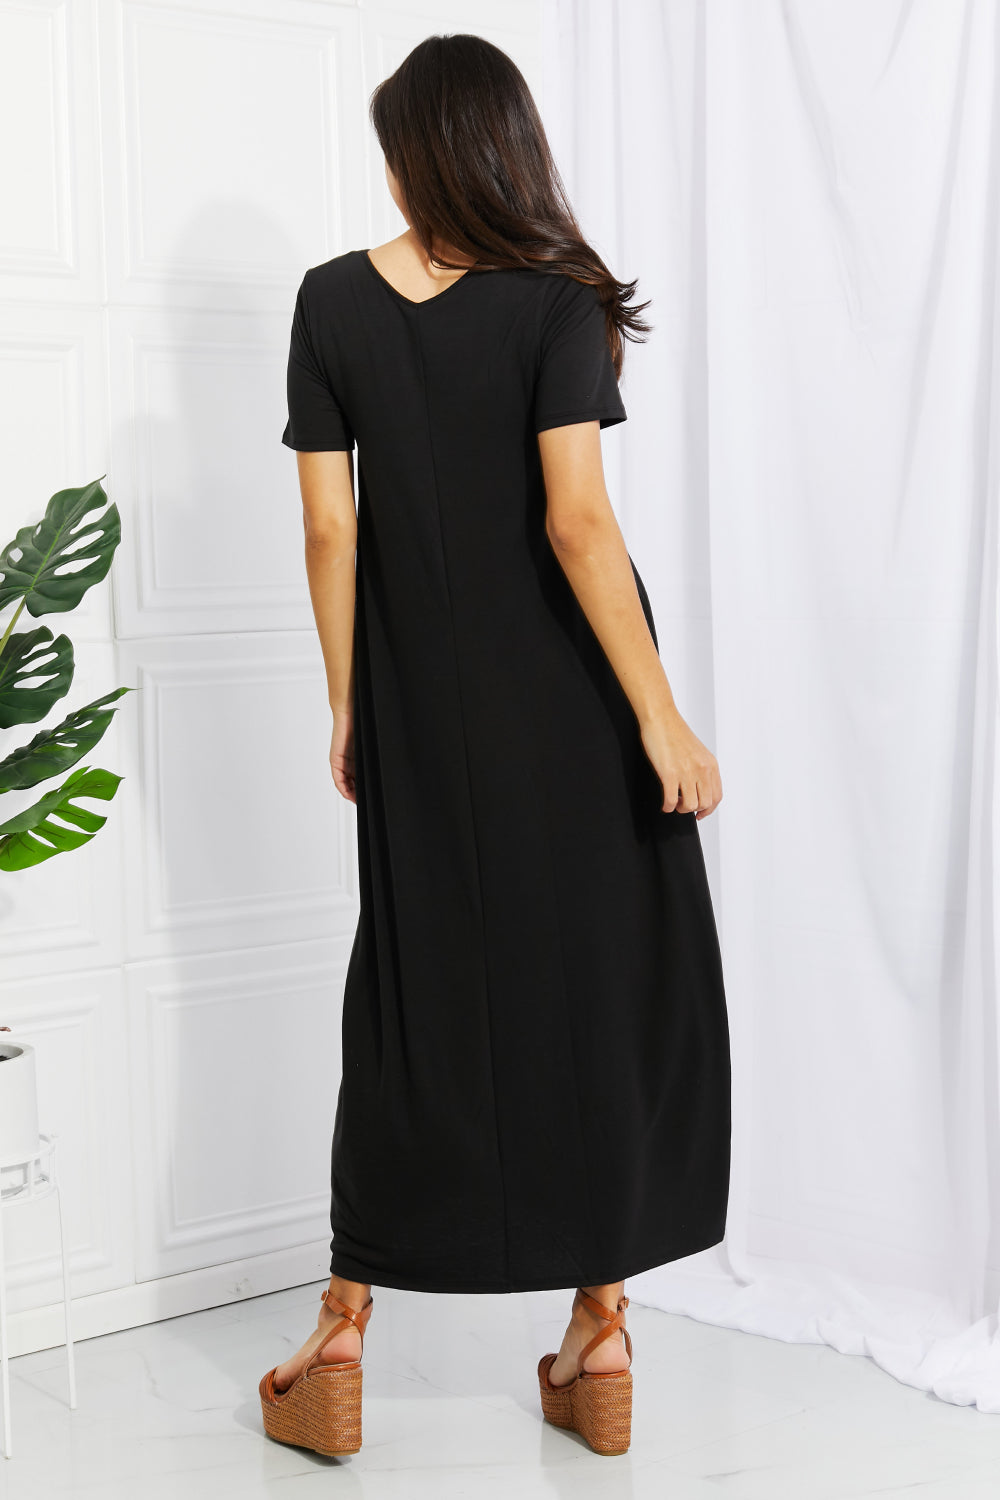 Zenana Simple Wonder Full Size Pocket Maxi Dress in Black | Dress - CHANELIA